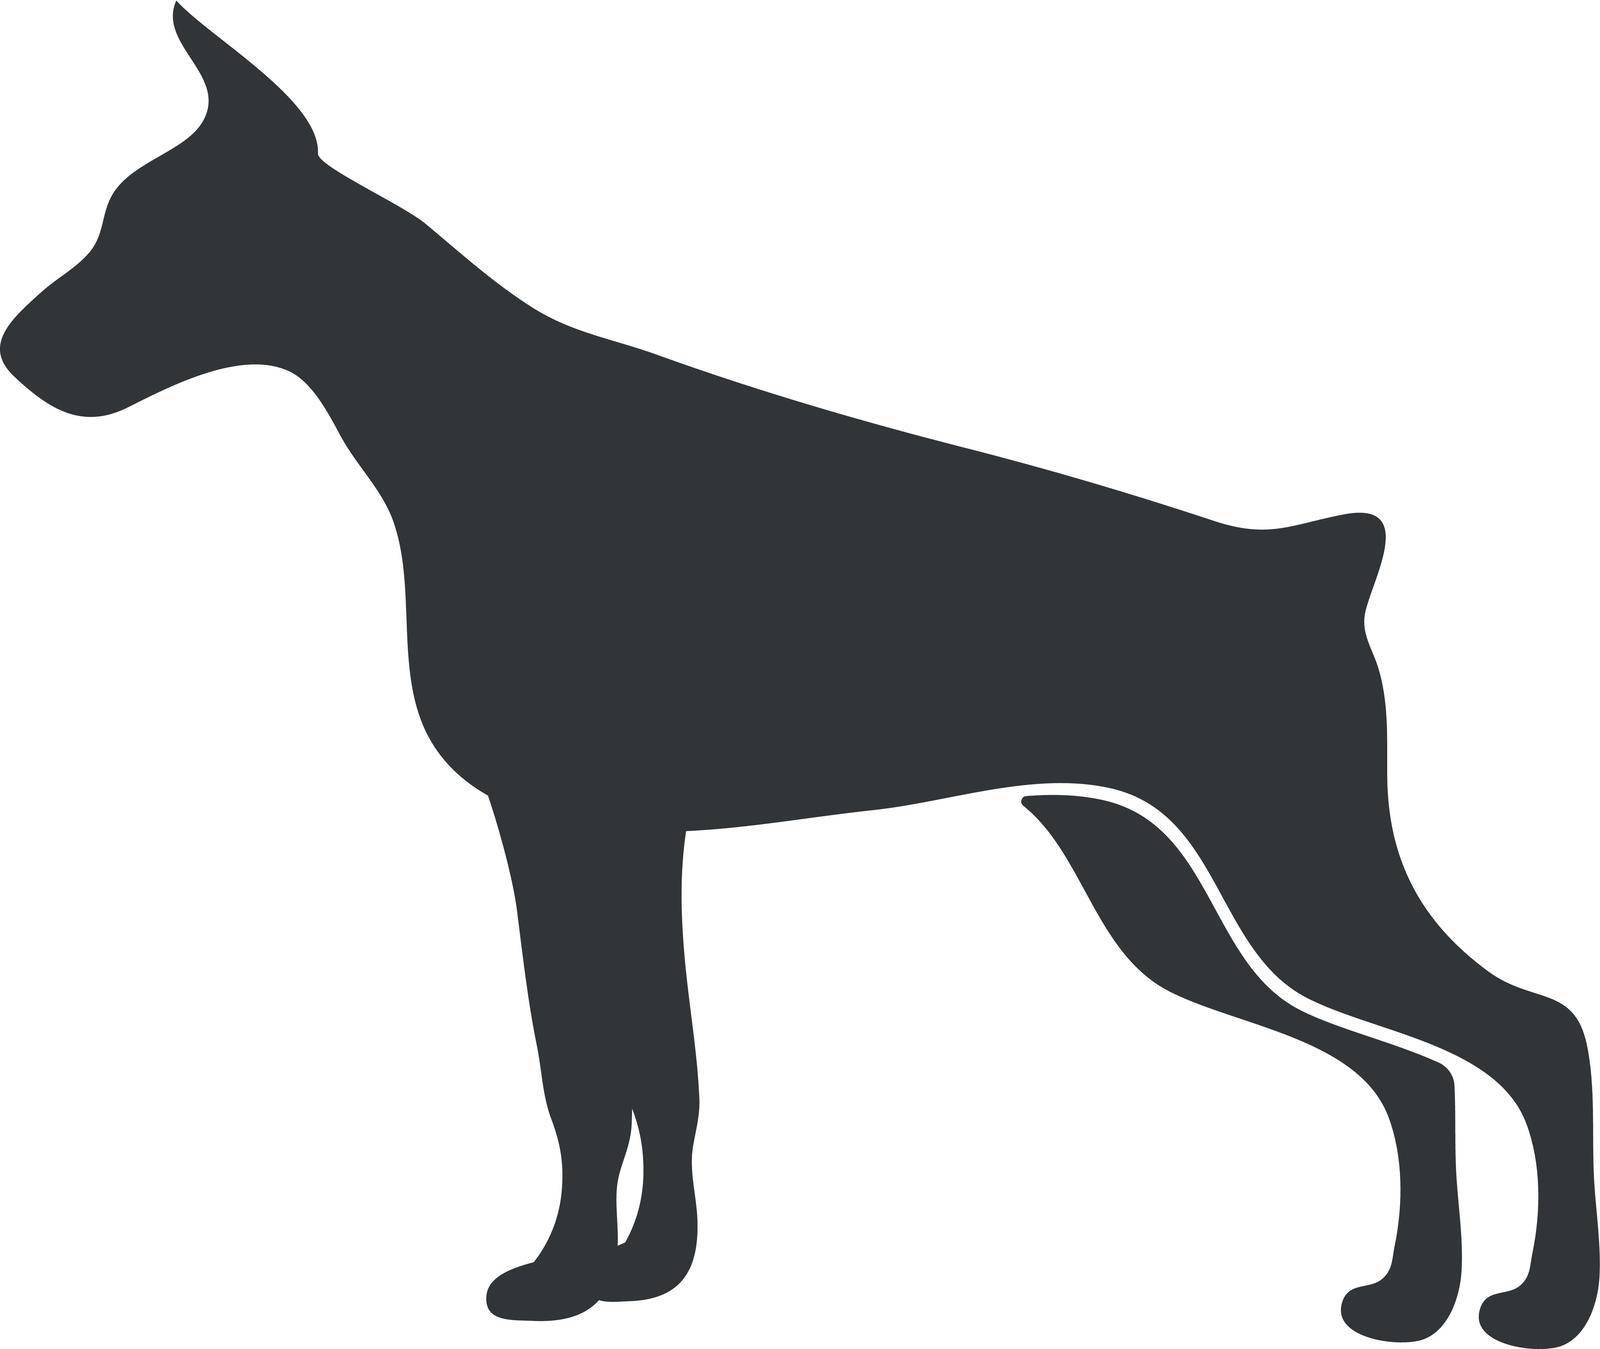 Doberman silhouette. pedigree shorthaired beast running dog, vector icon by Stock-Smart-Start